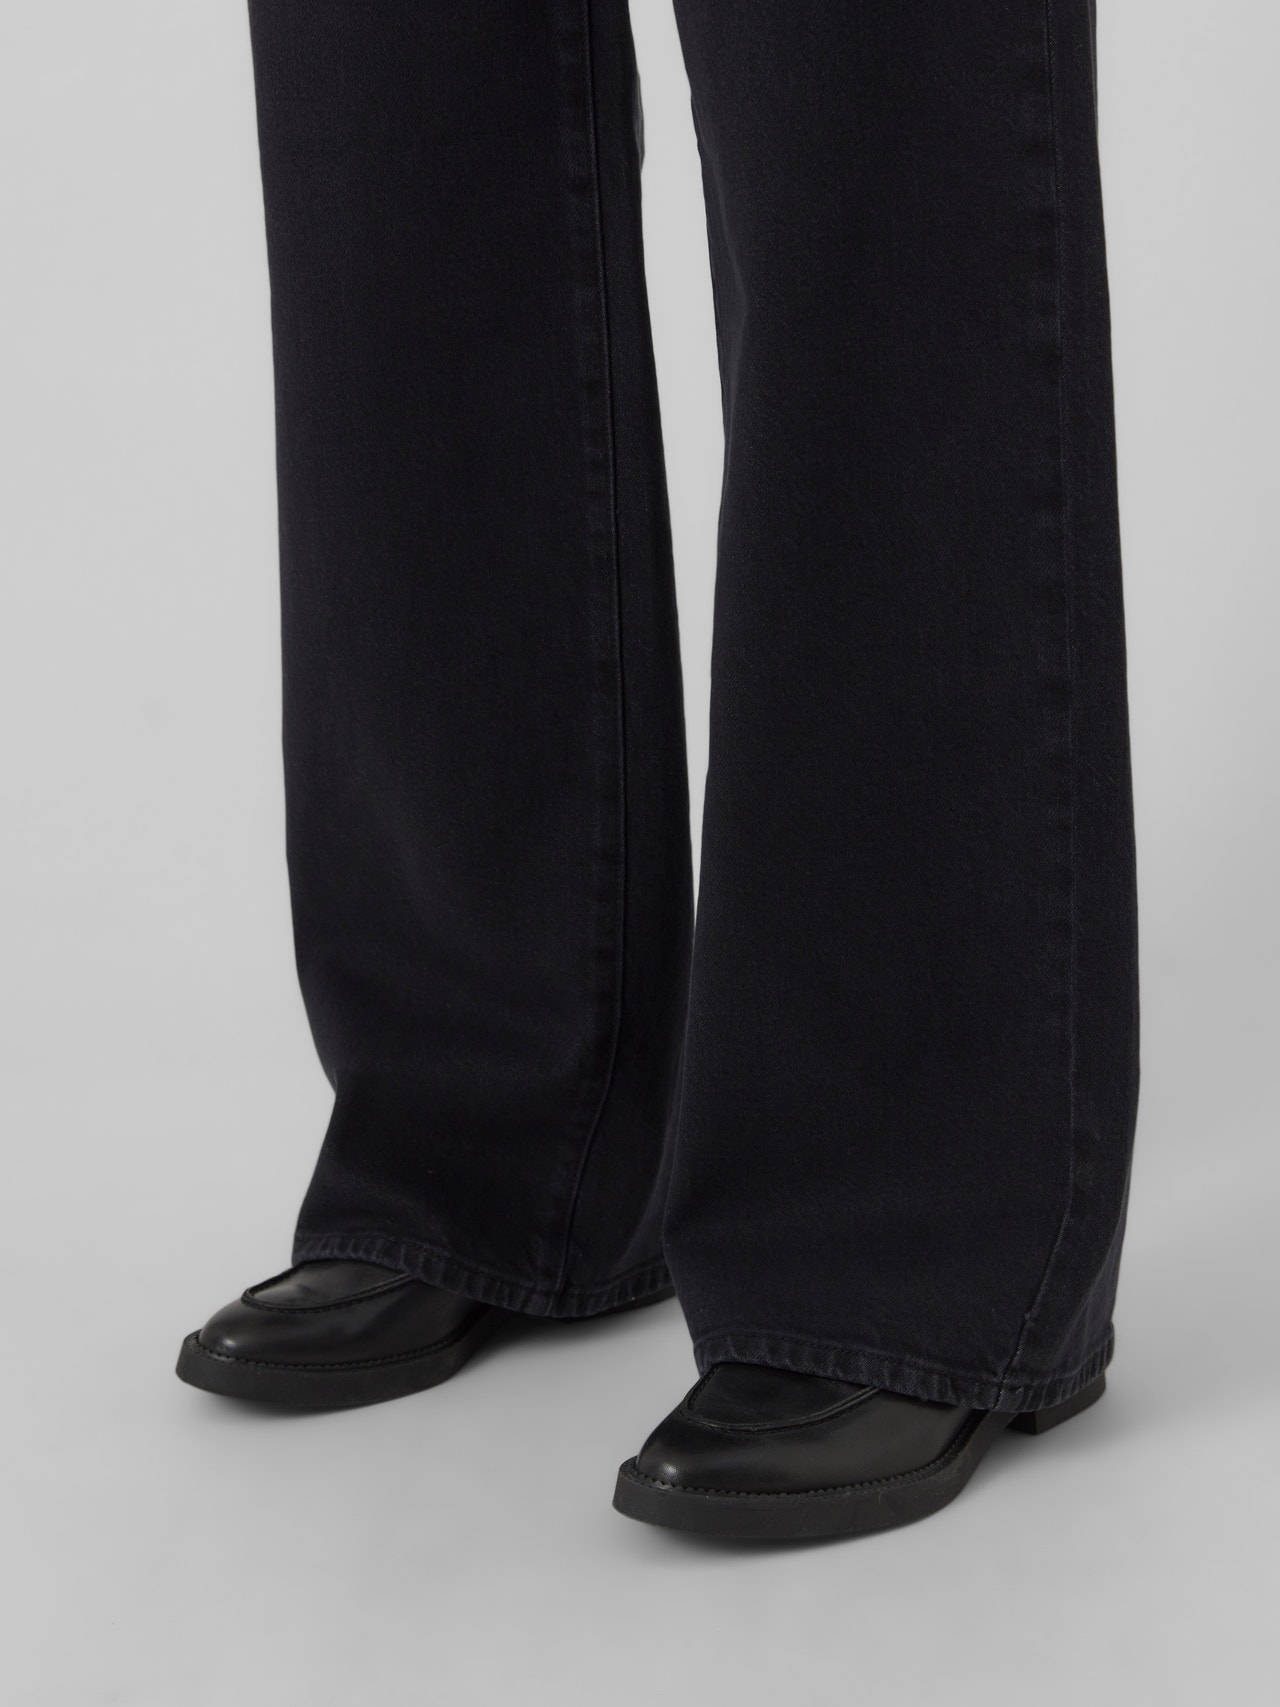 Vero Moda VMFAITH Szeroki krój Jeans -Black Denim - 10303305